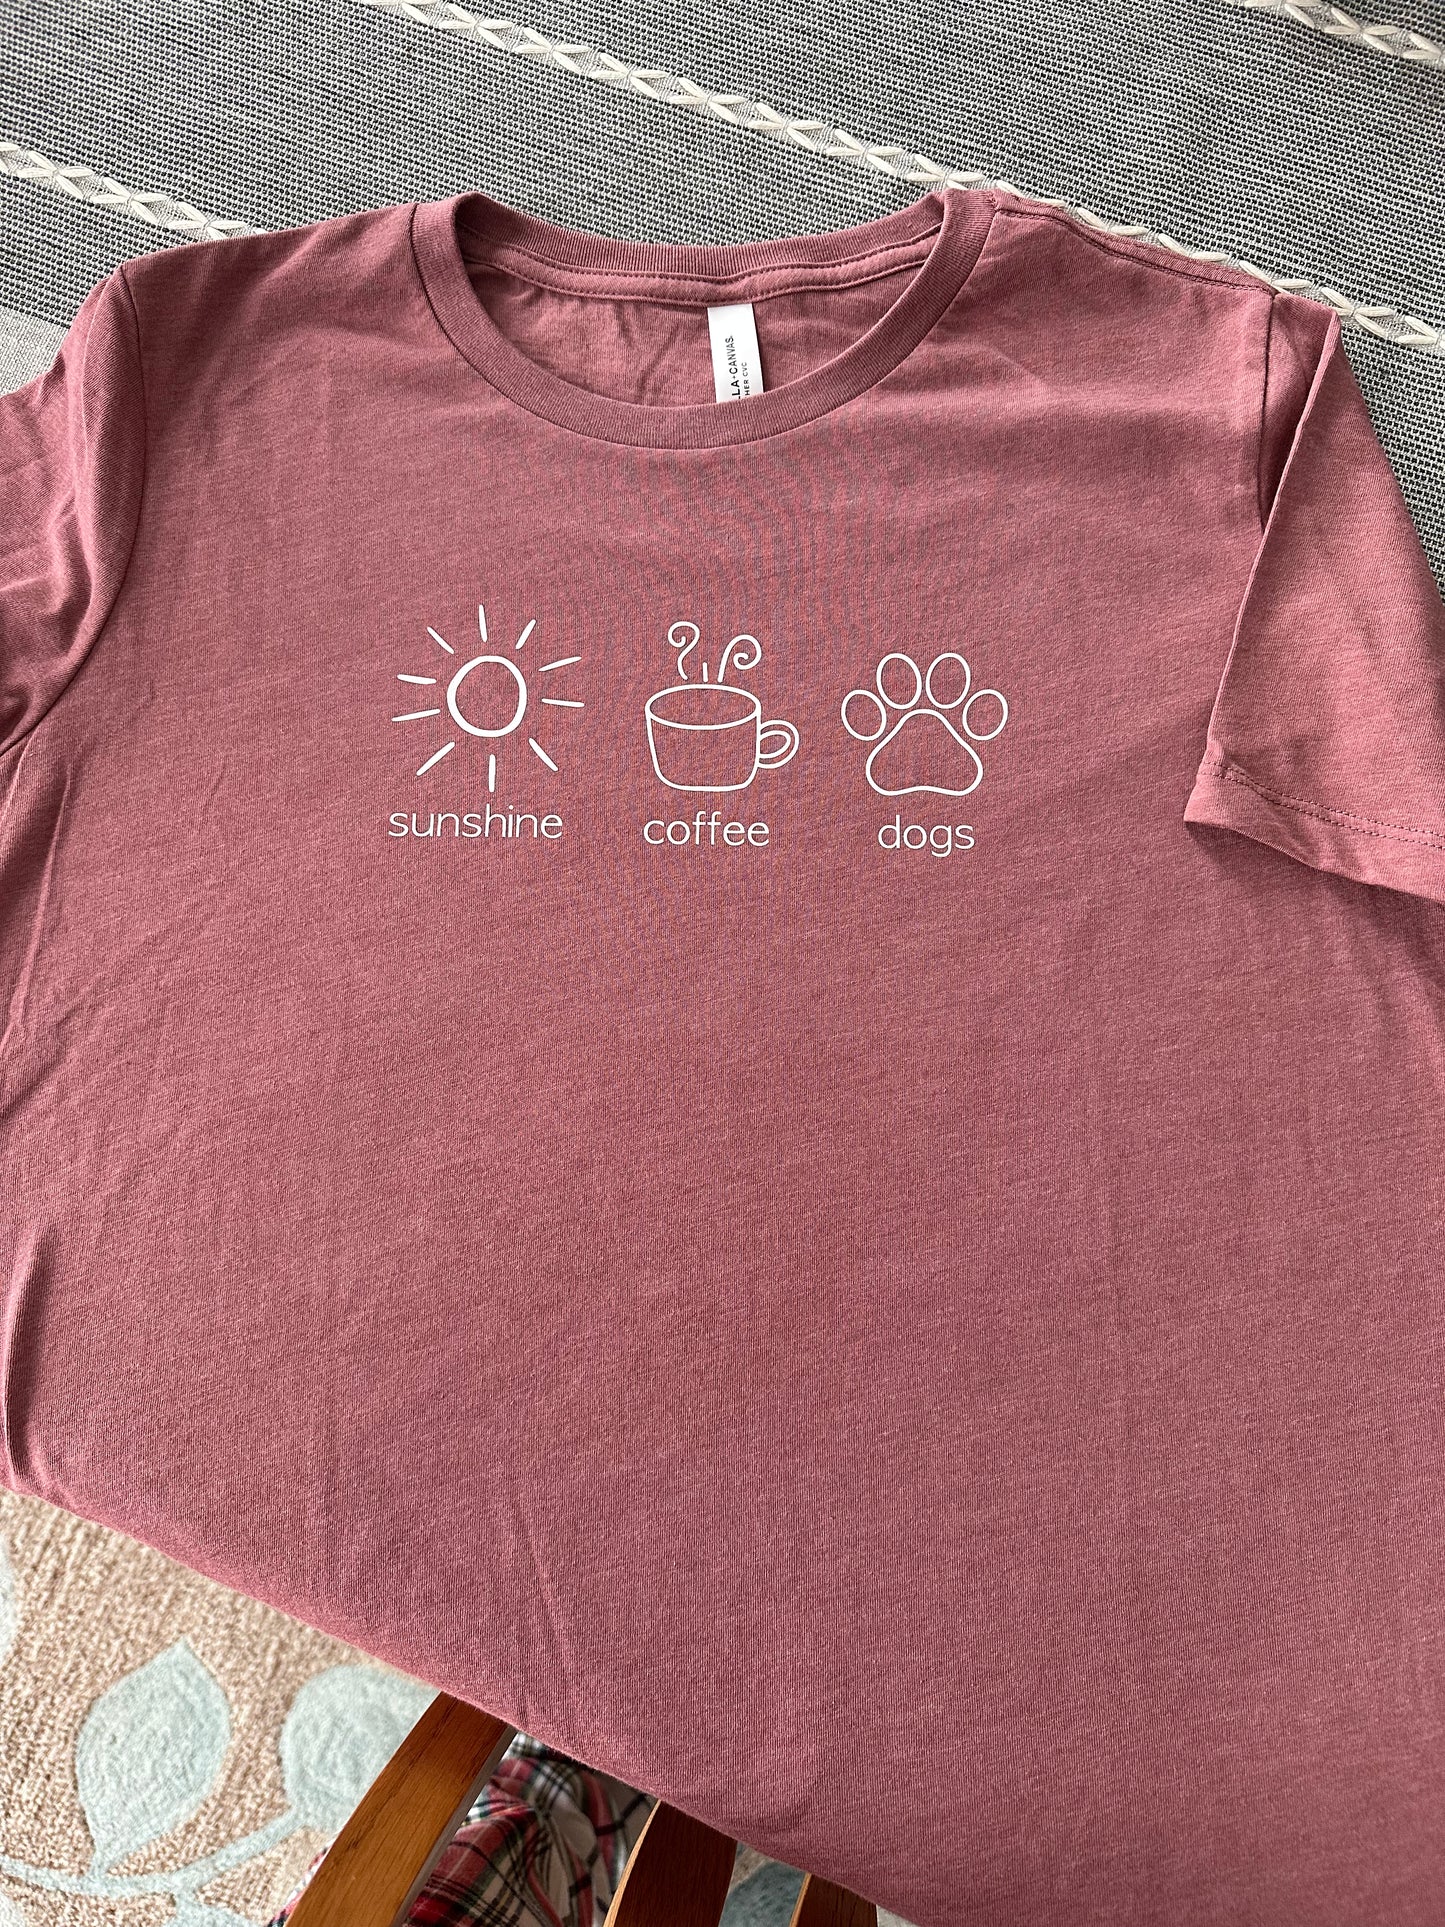 Sunshine Coffee Dogs T-shirt- Pre-order